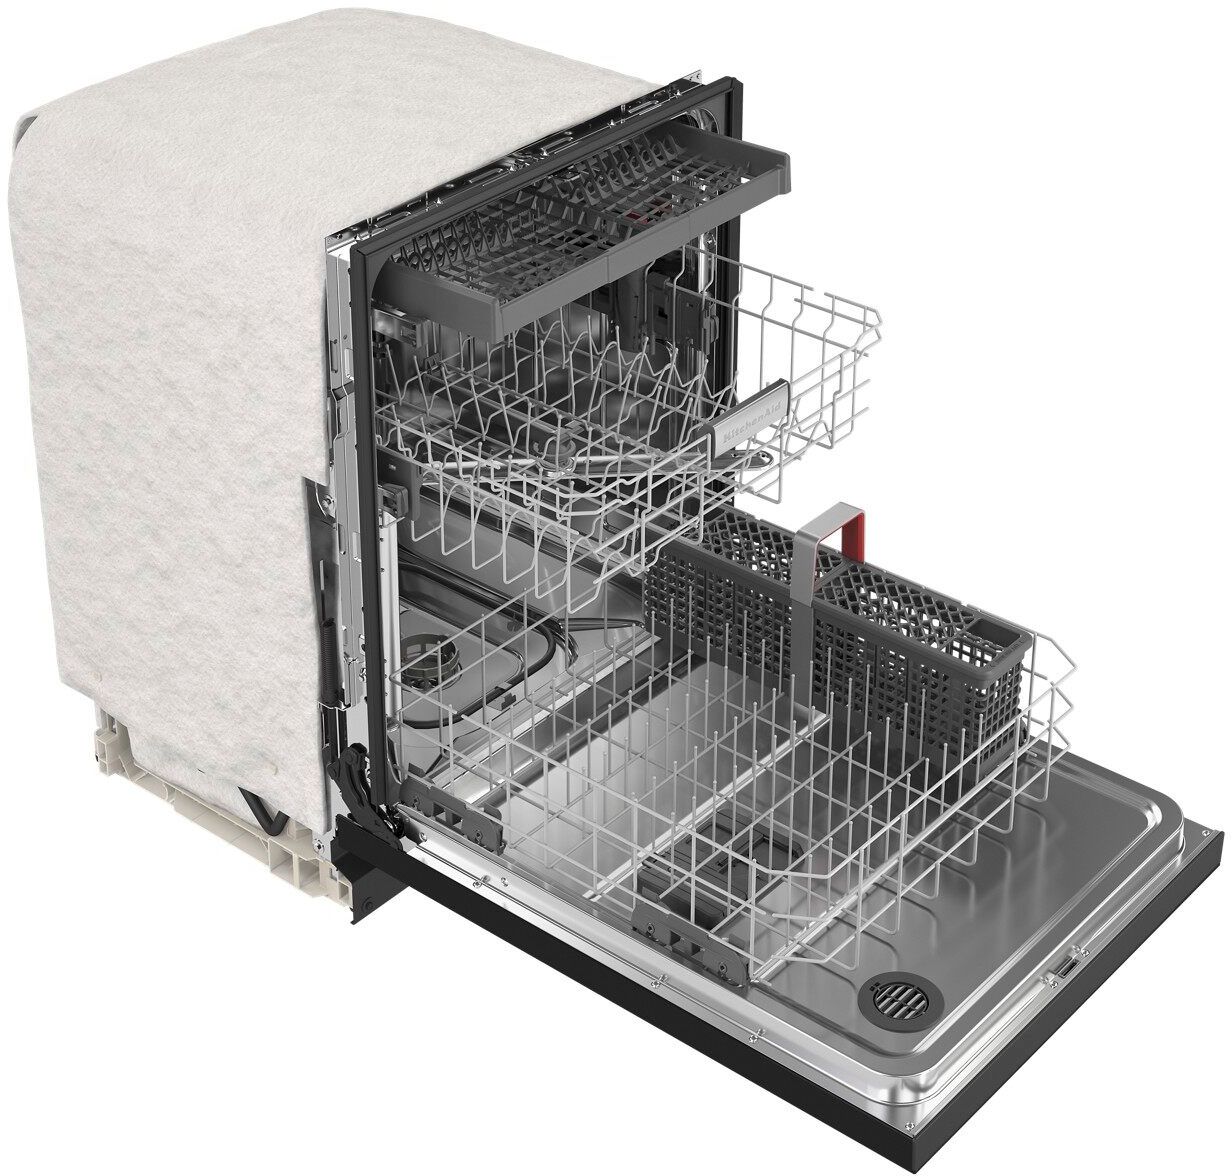 KDAS108HSS KitchenAid KitchenAid 18 Dishwasher Panel Kit - Stainless Steel  STAINLESS STEEL - Oliver Dyer's Appliance